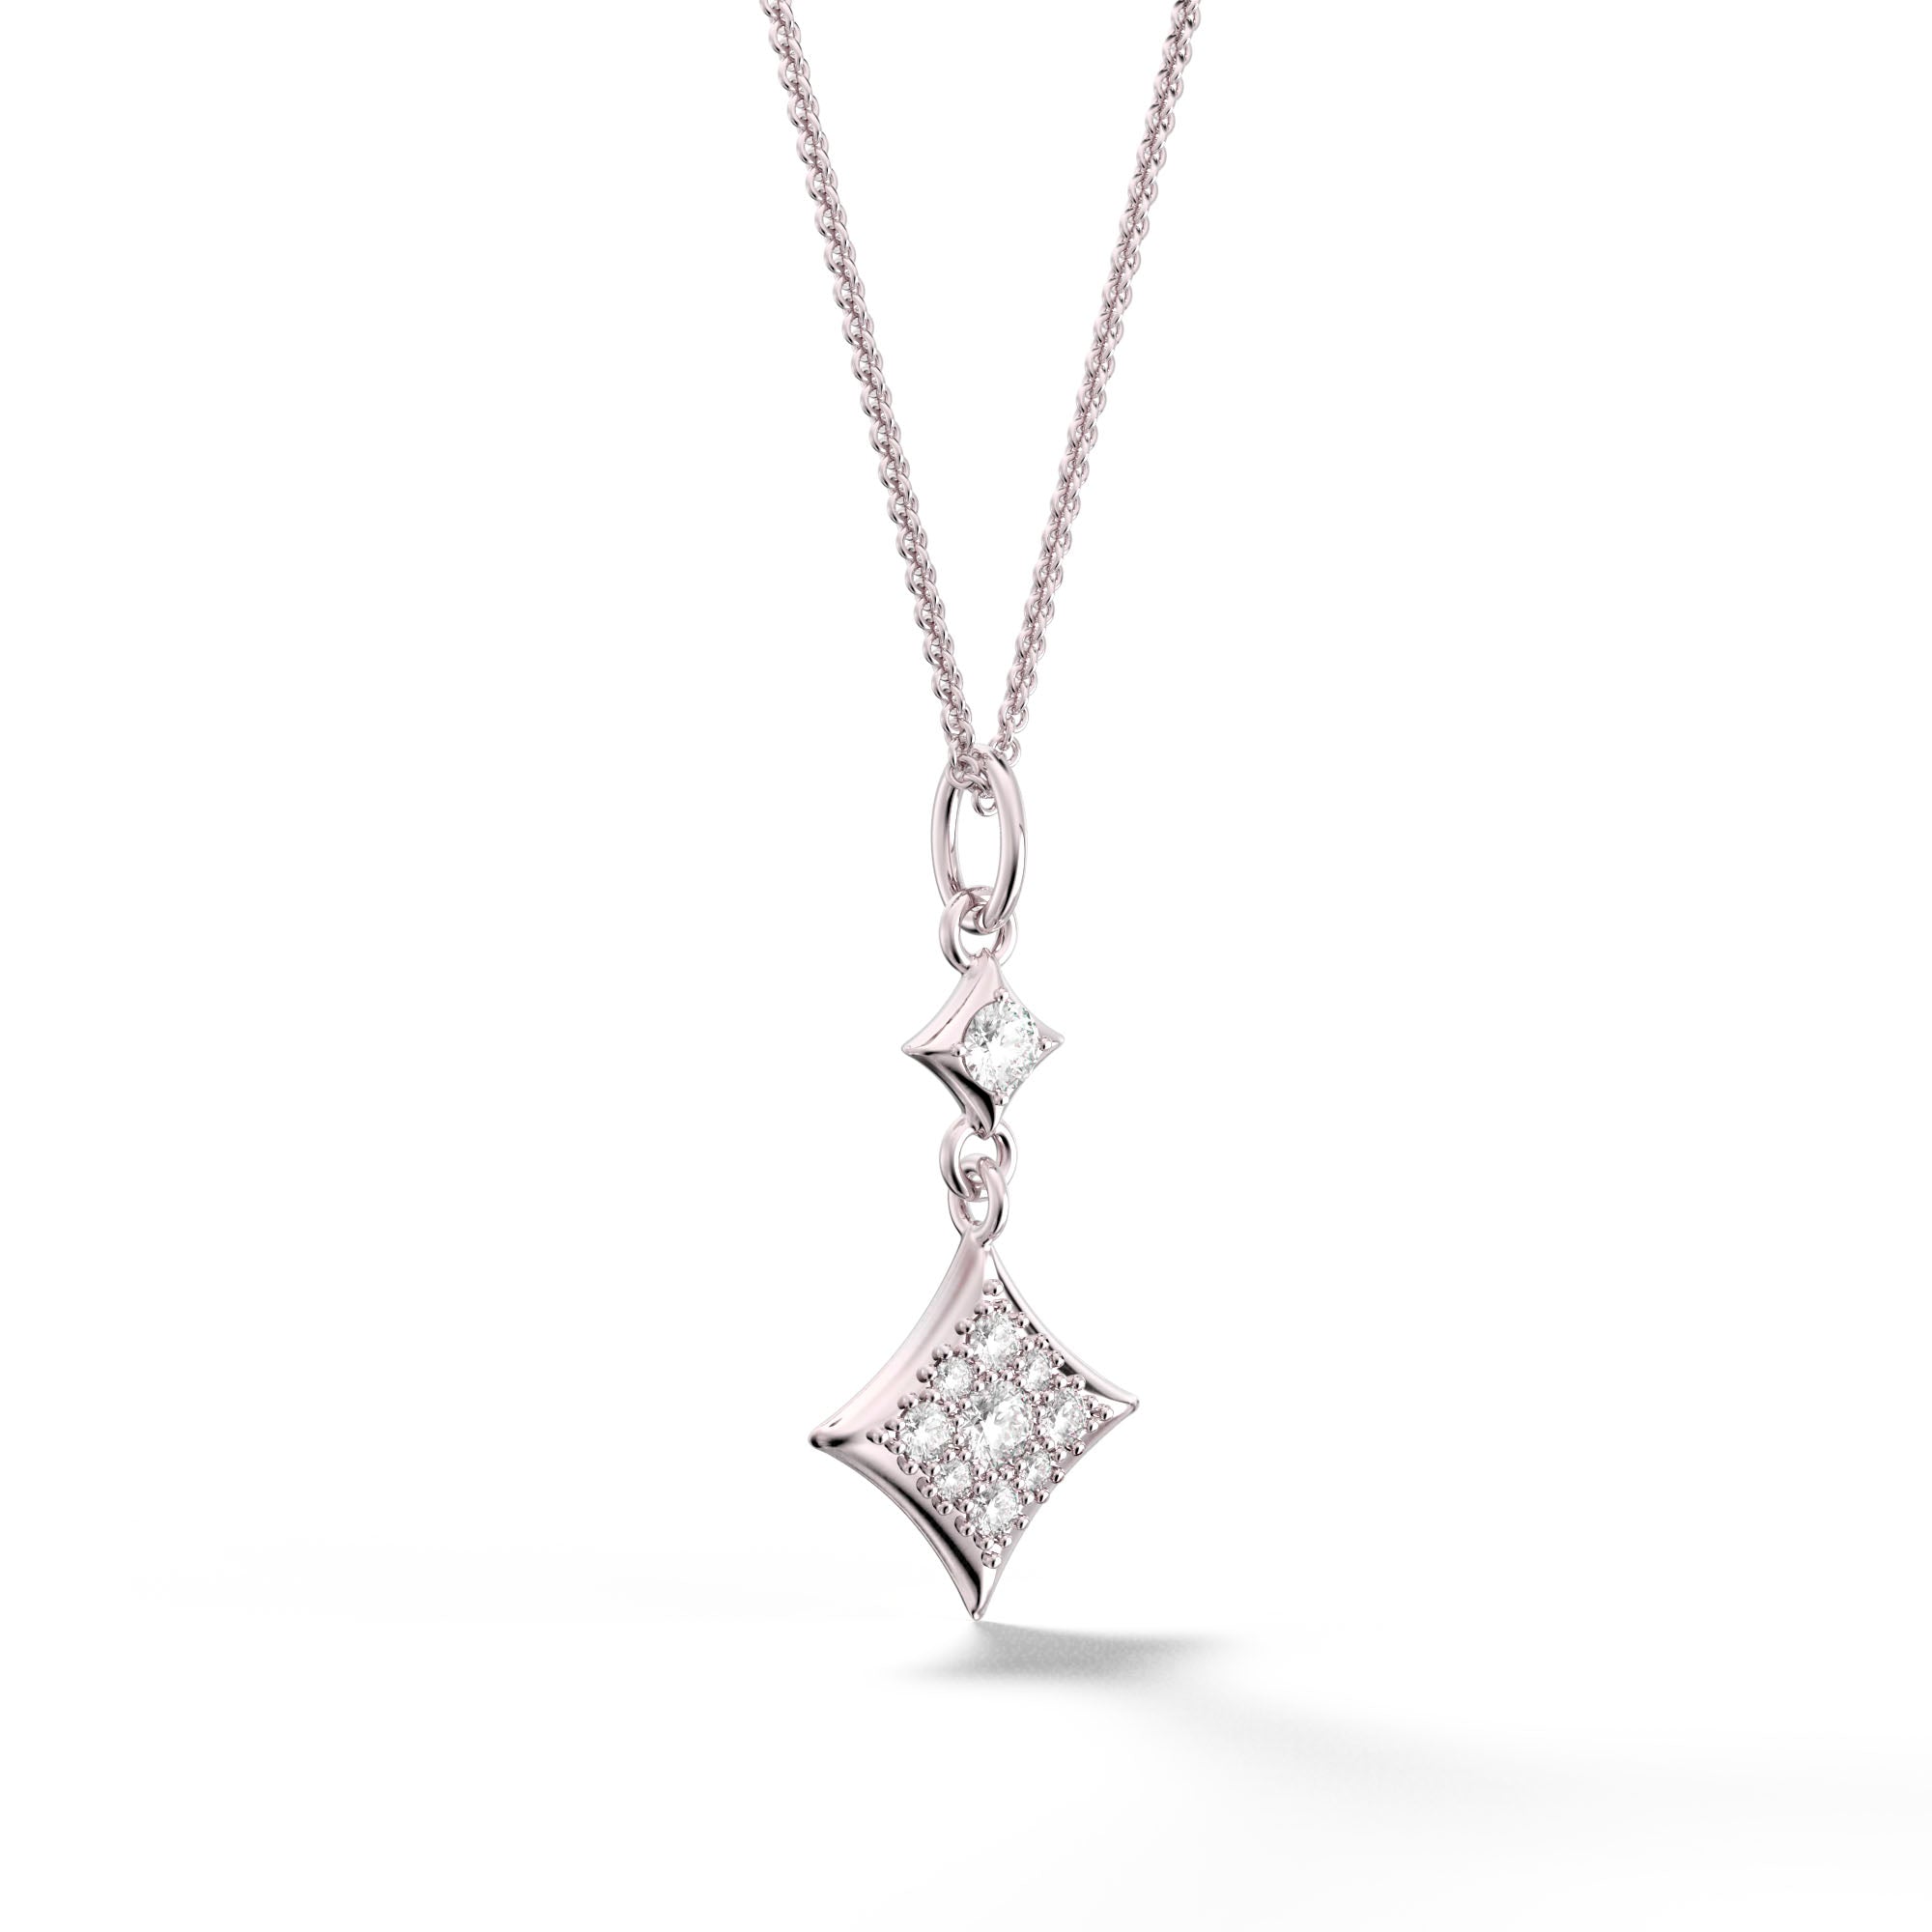 Csillag Stella - White Gold Pendant with Diamonds - Csilla Jewelry